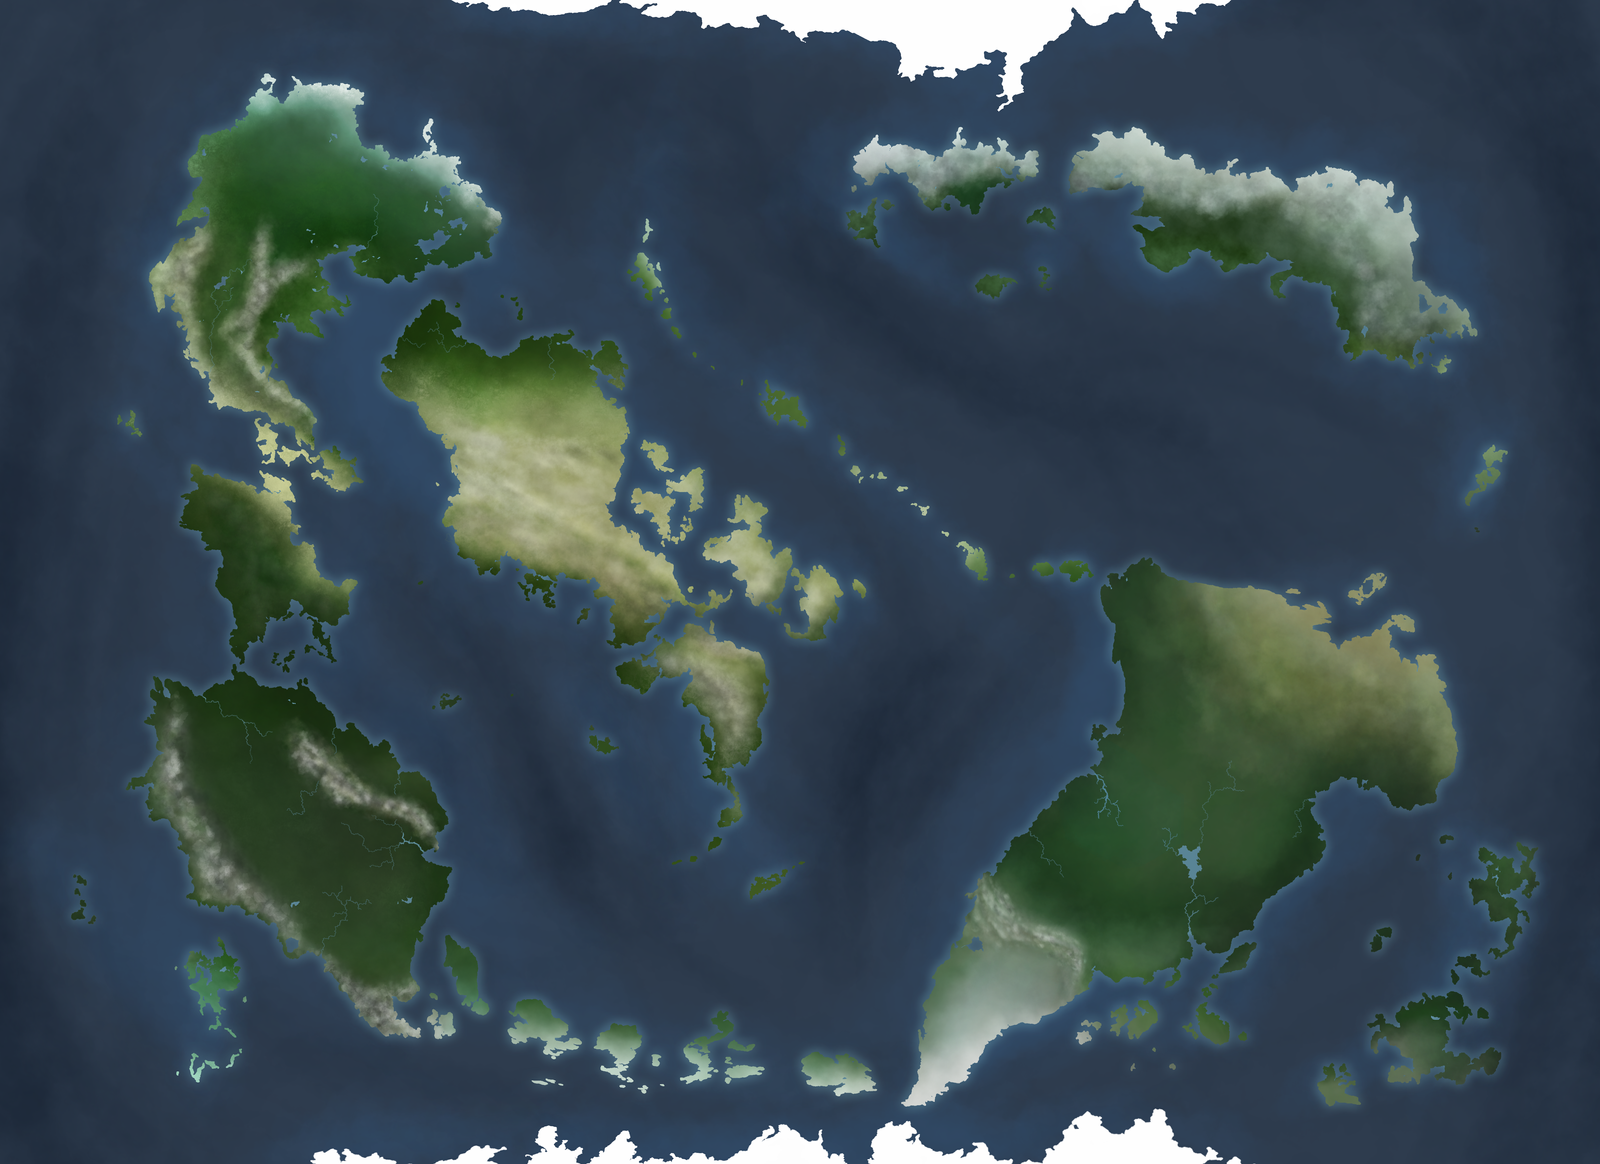 oesaria_world_map_by_demirari-db6xz7m.png